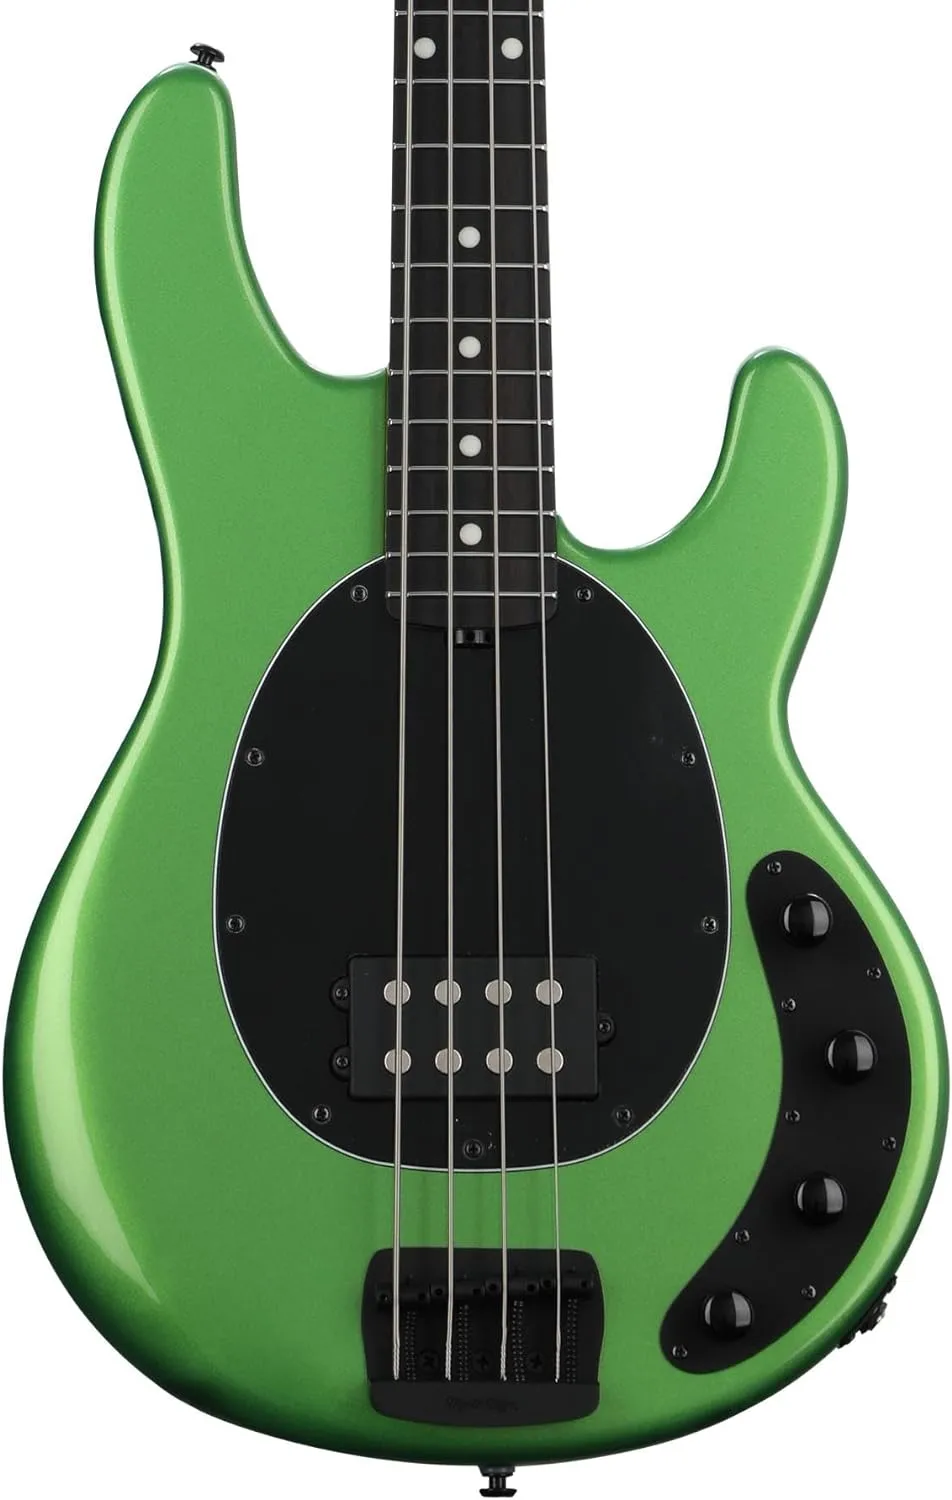 StingRay Special Bass Guitar - Kiwi Green with Ebony Fingerboard